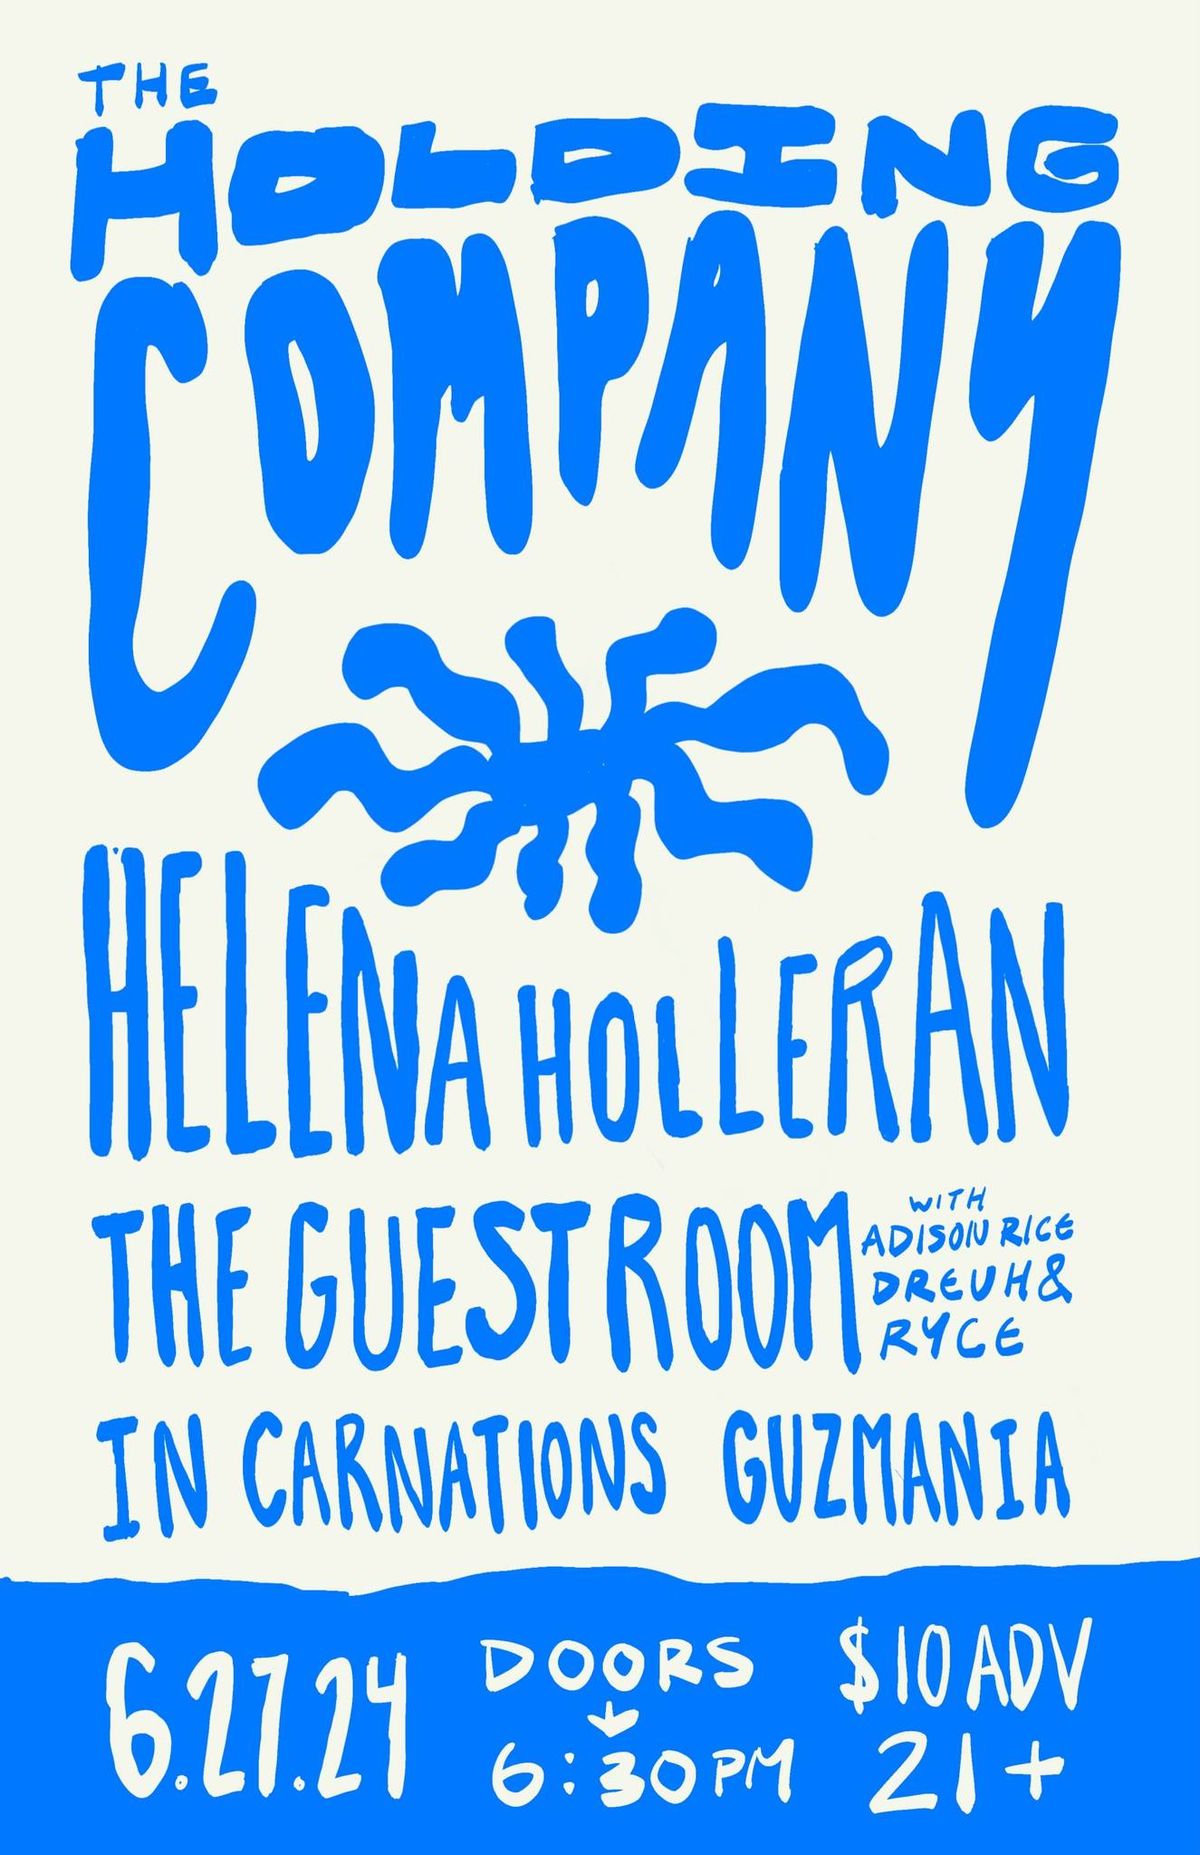 Helena Holleran Band live at The Holding Company 